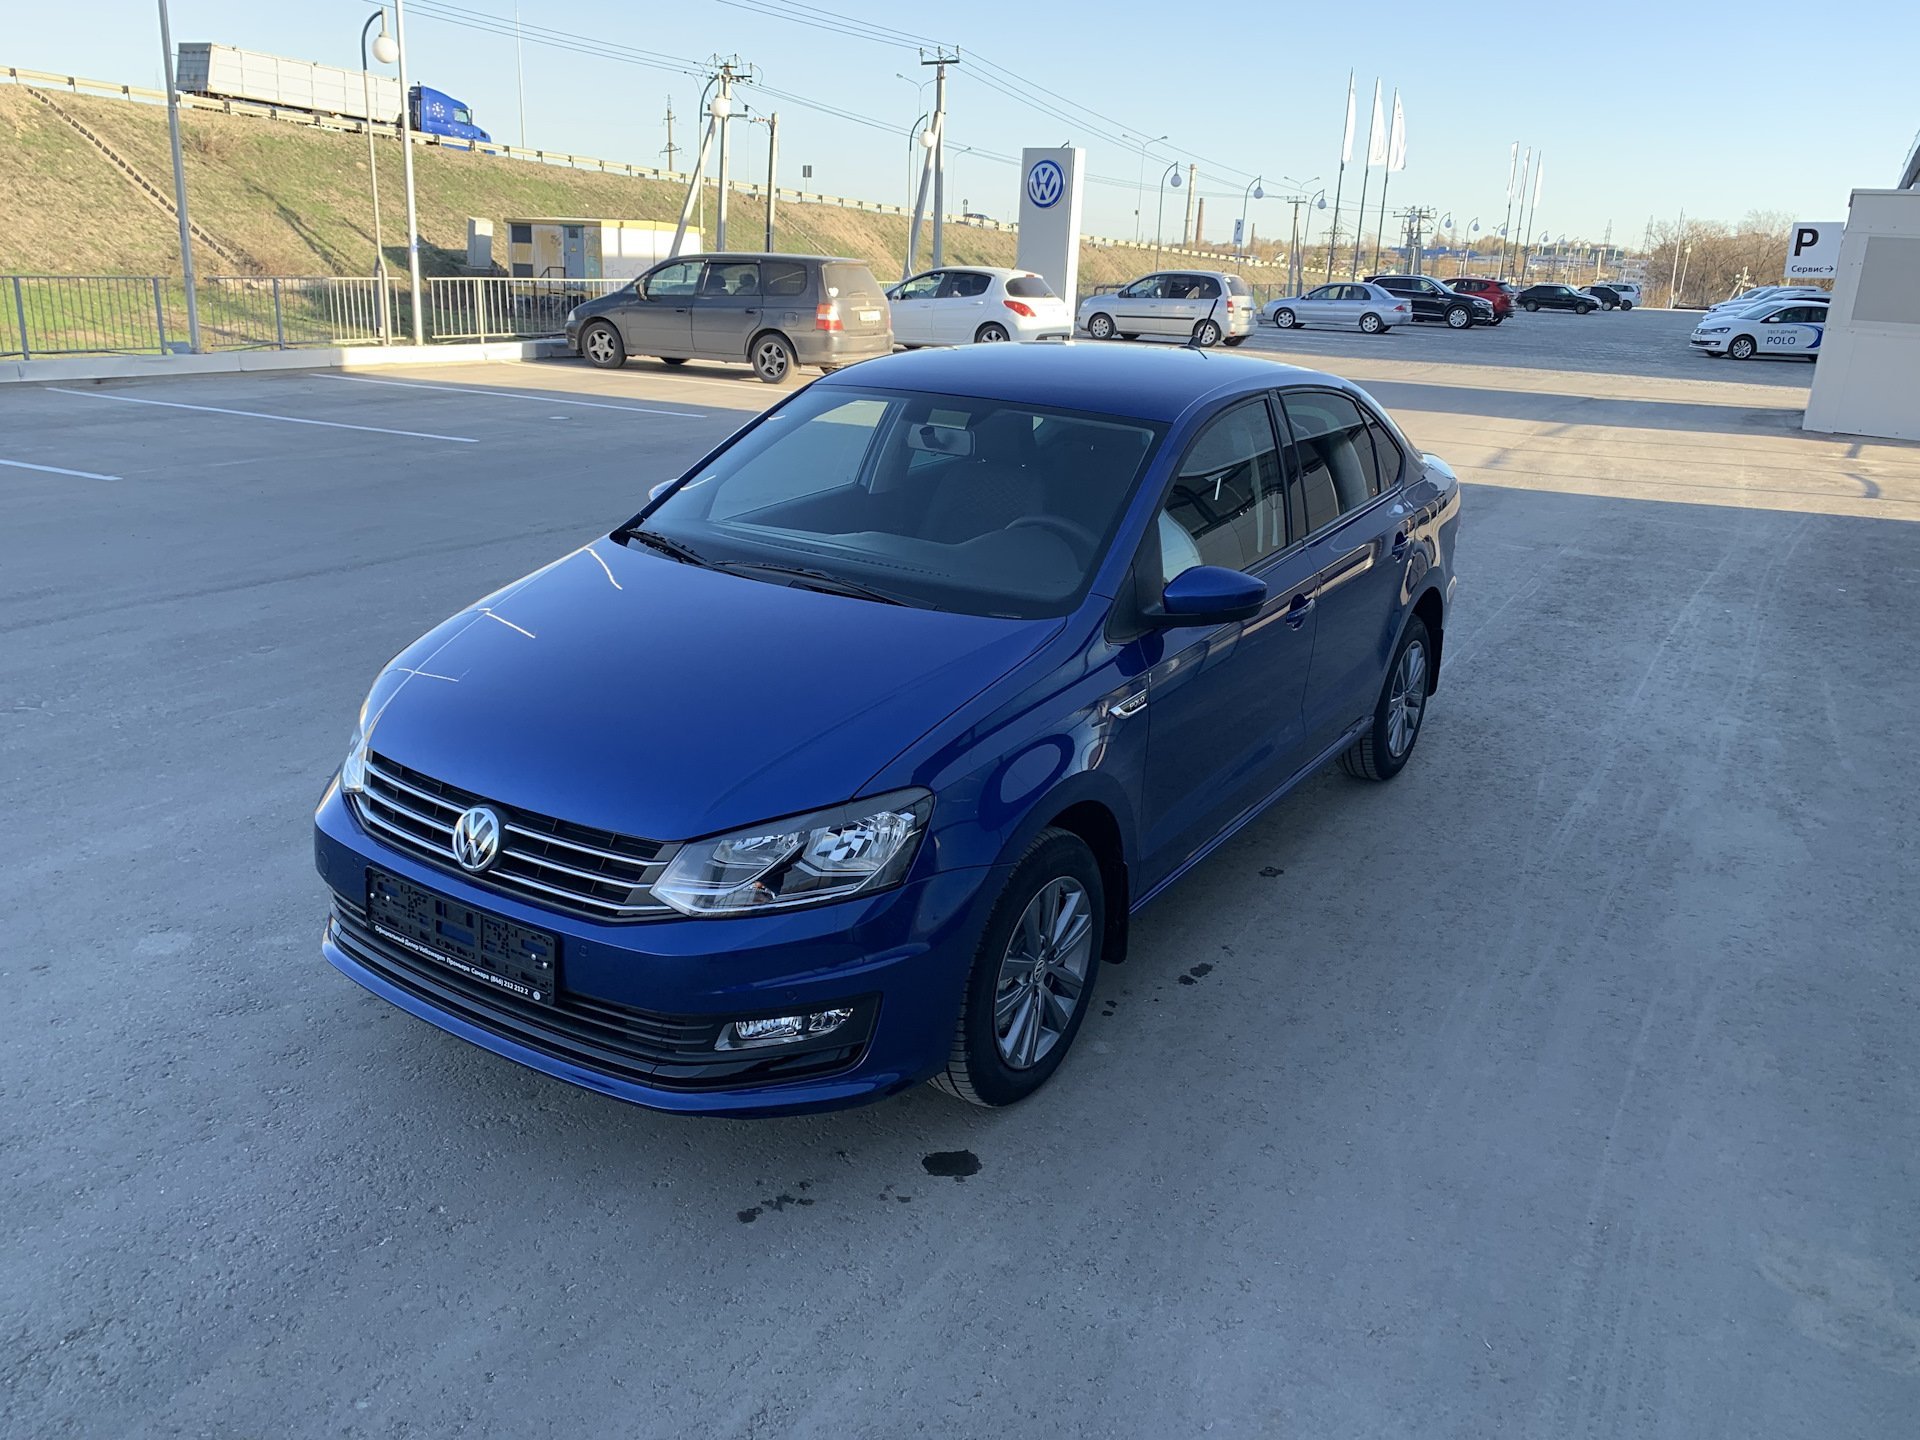 Volkswagen синий. Синий Volkswagen Polo sedan. Синий VW Polo sedan. Фольксваген поло 2018 седан синий. Темно синий Фольксваген поло седан.